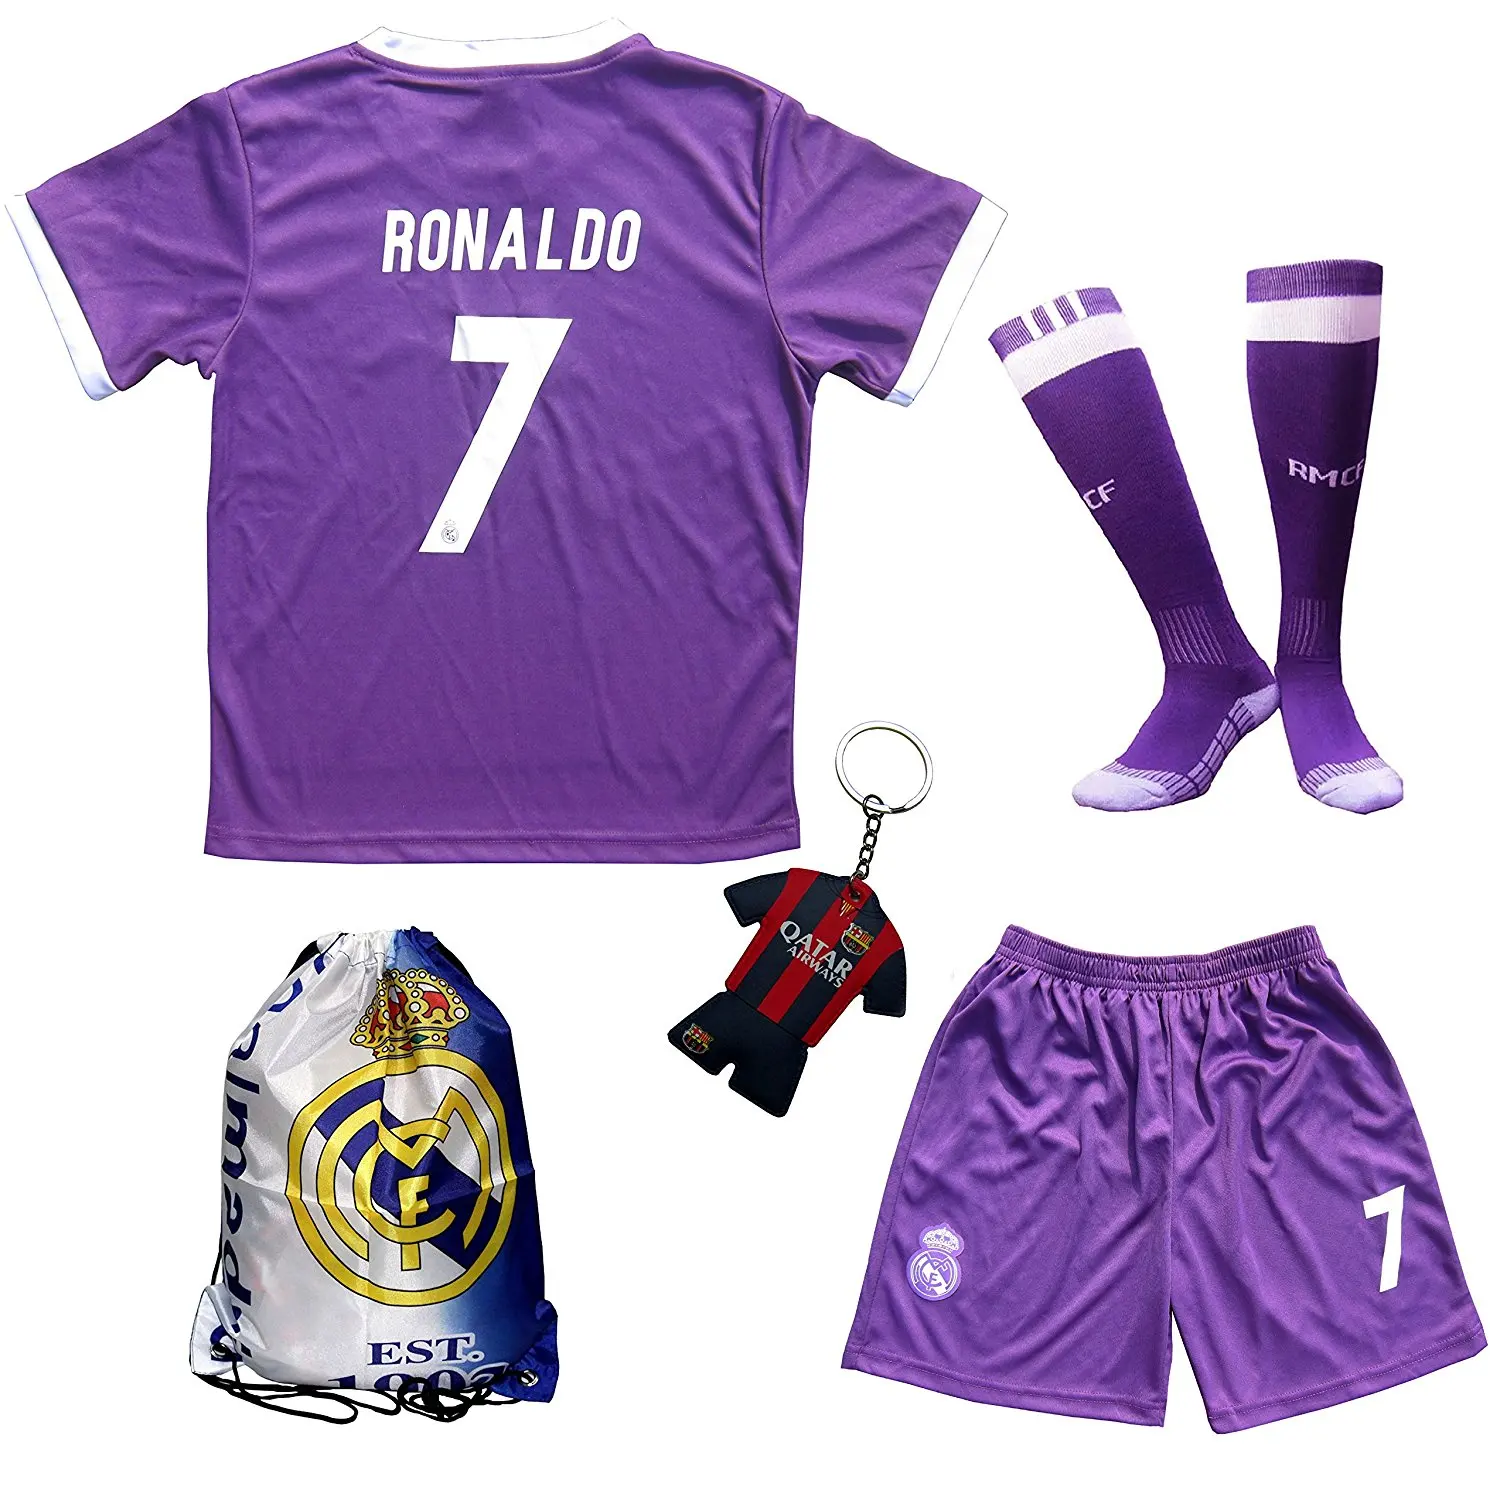 GamesDur 2017//2018 Real Madrid Cristiano Ronaldo #7 Home Football Soccer Kids Jersey /& Short /& Sock /& Soccer Bag Youth Sizes